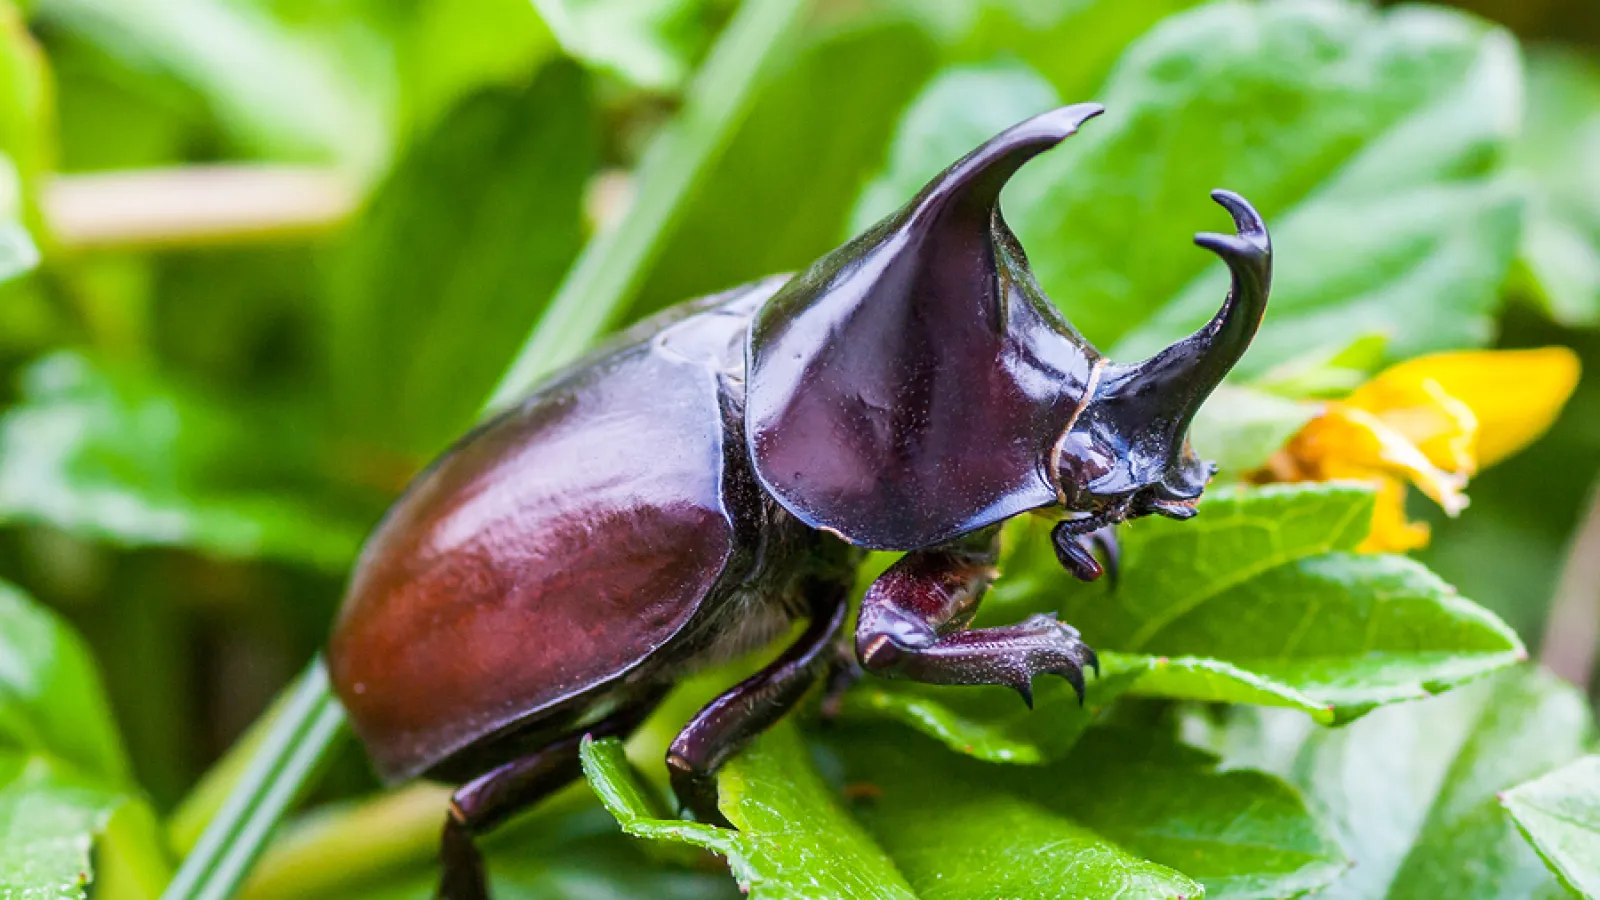 a beetle on a leaf